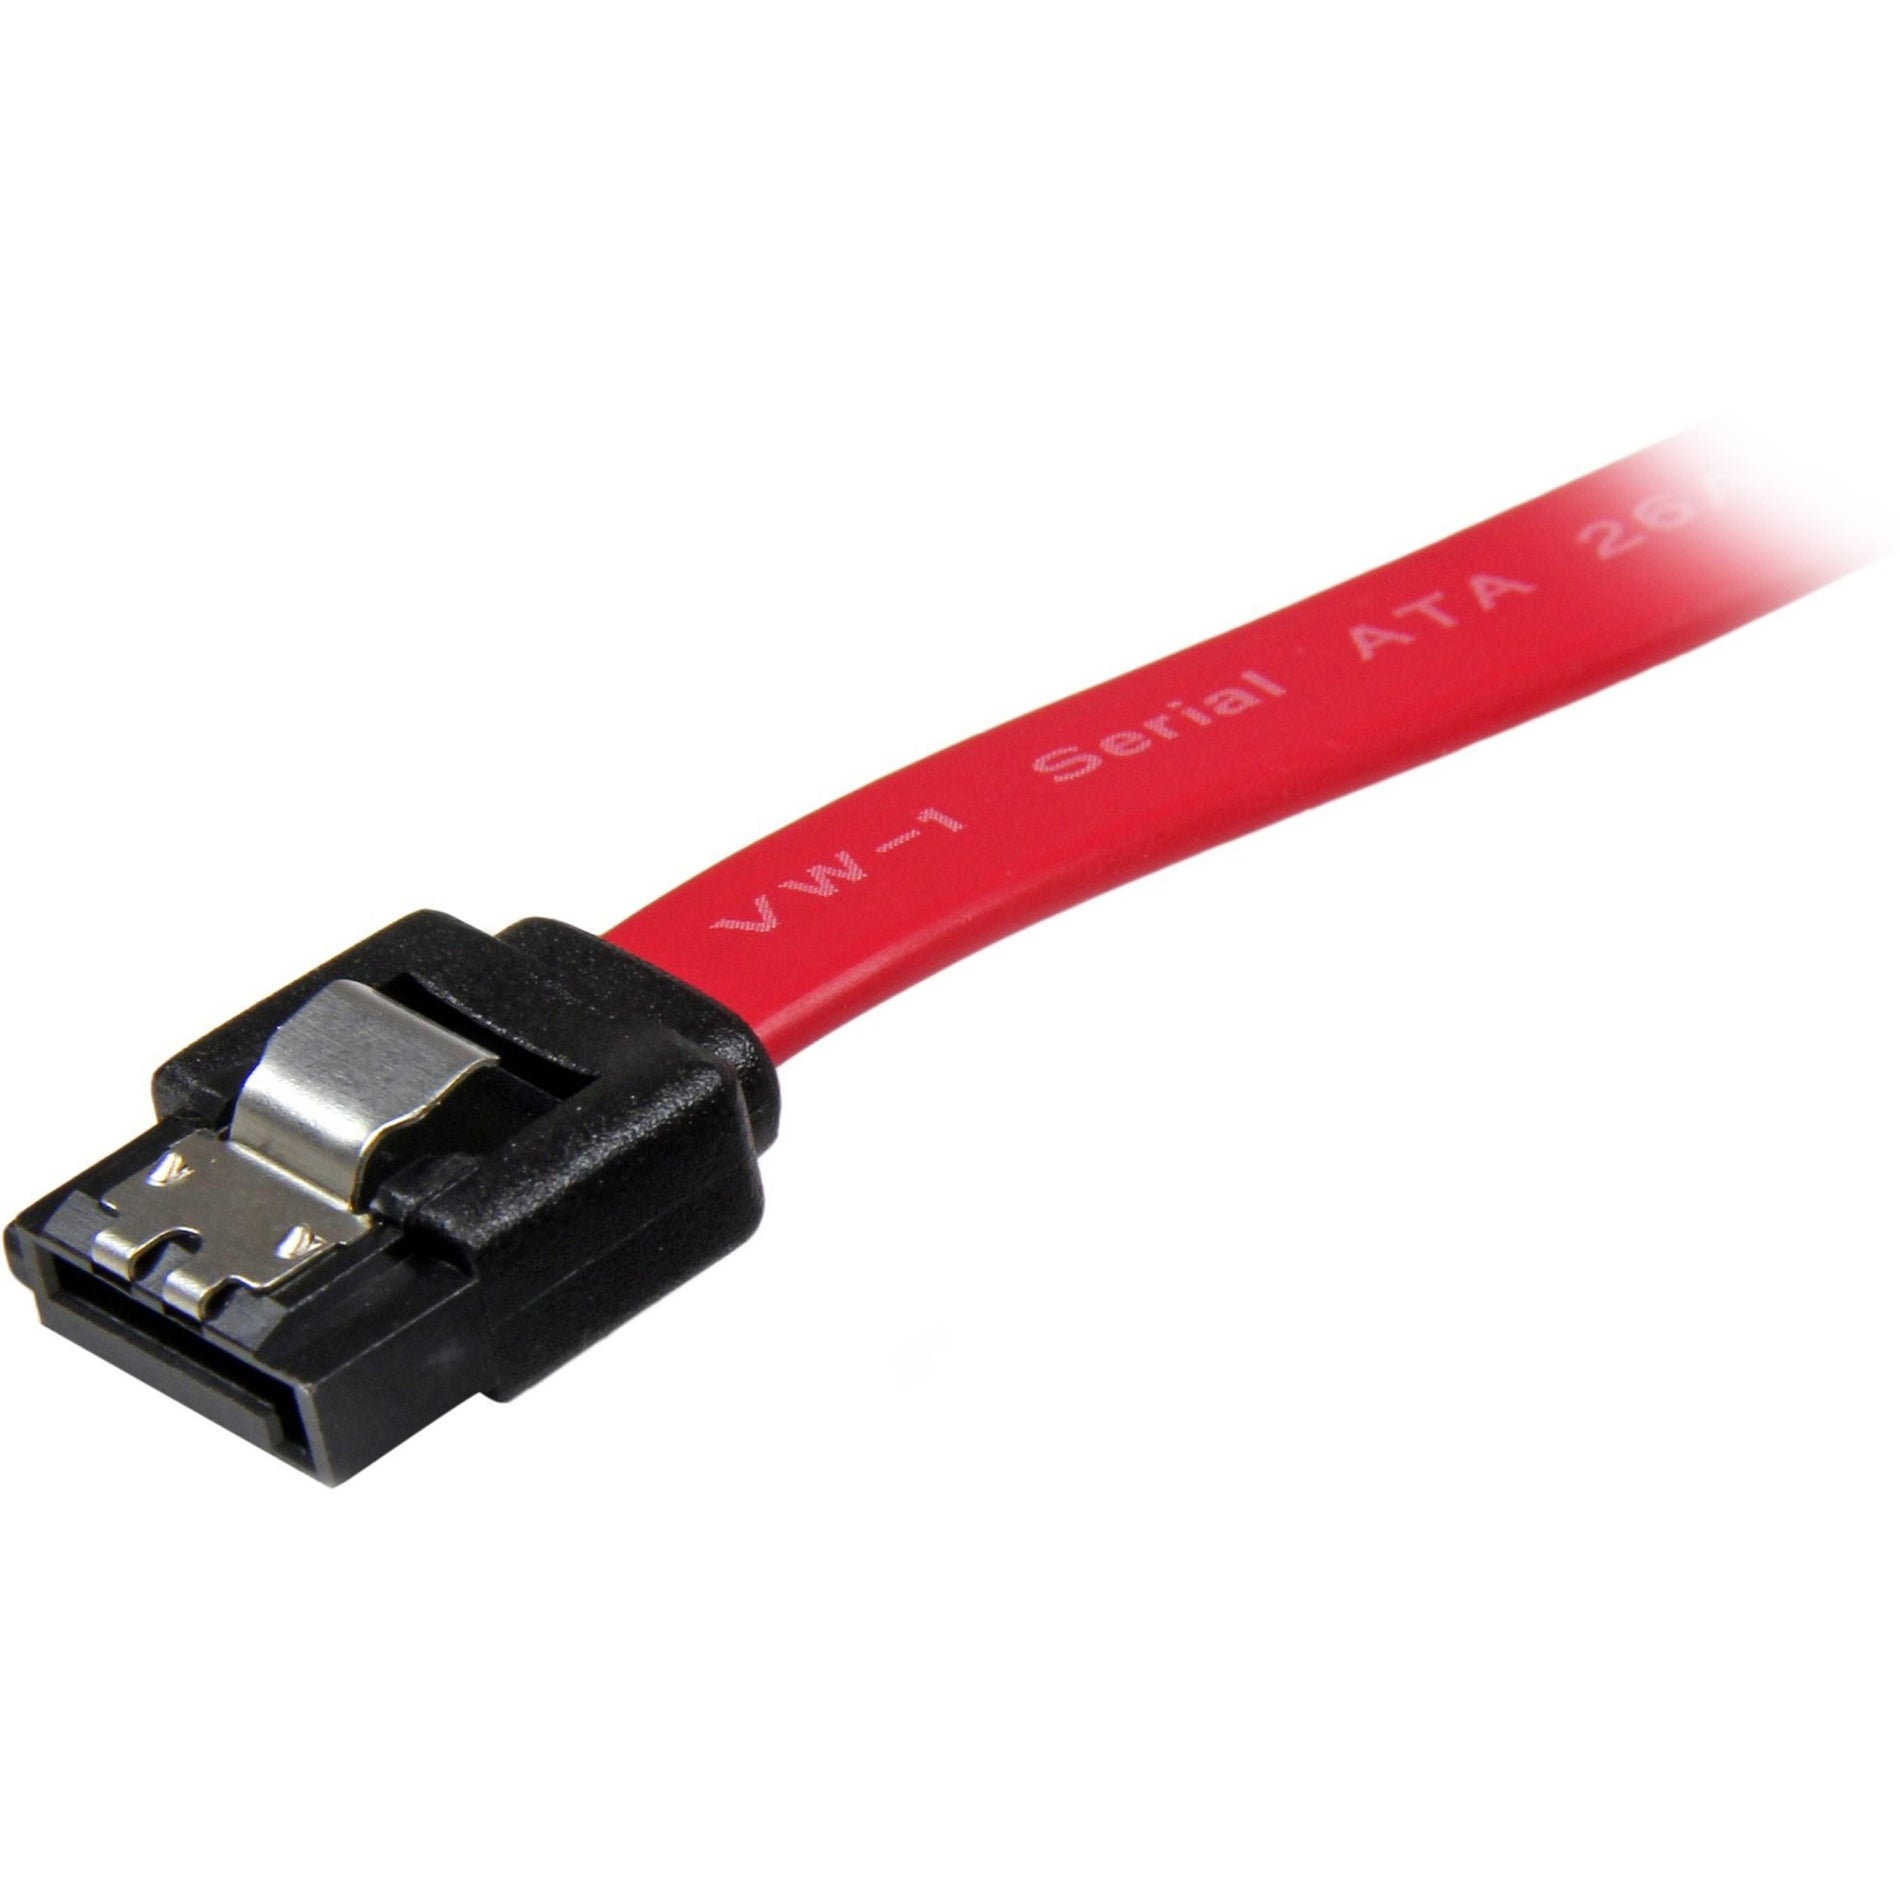 StarTech.com LSATA12 Latching SATA Cable, 1 ft, 6 Gbit/s Data Transfer Rate, Flexible